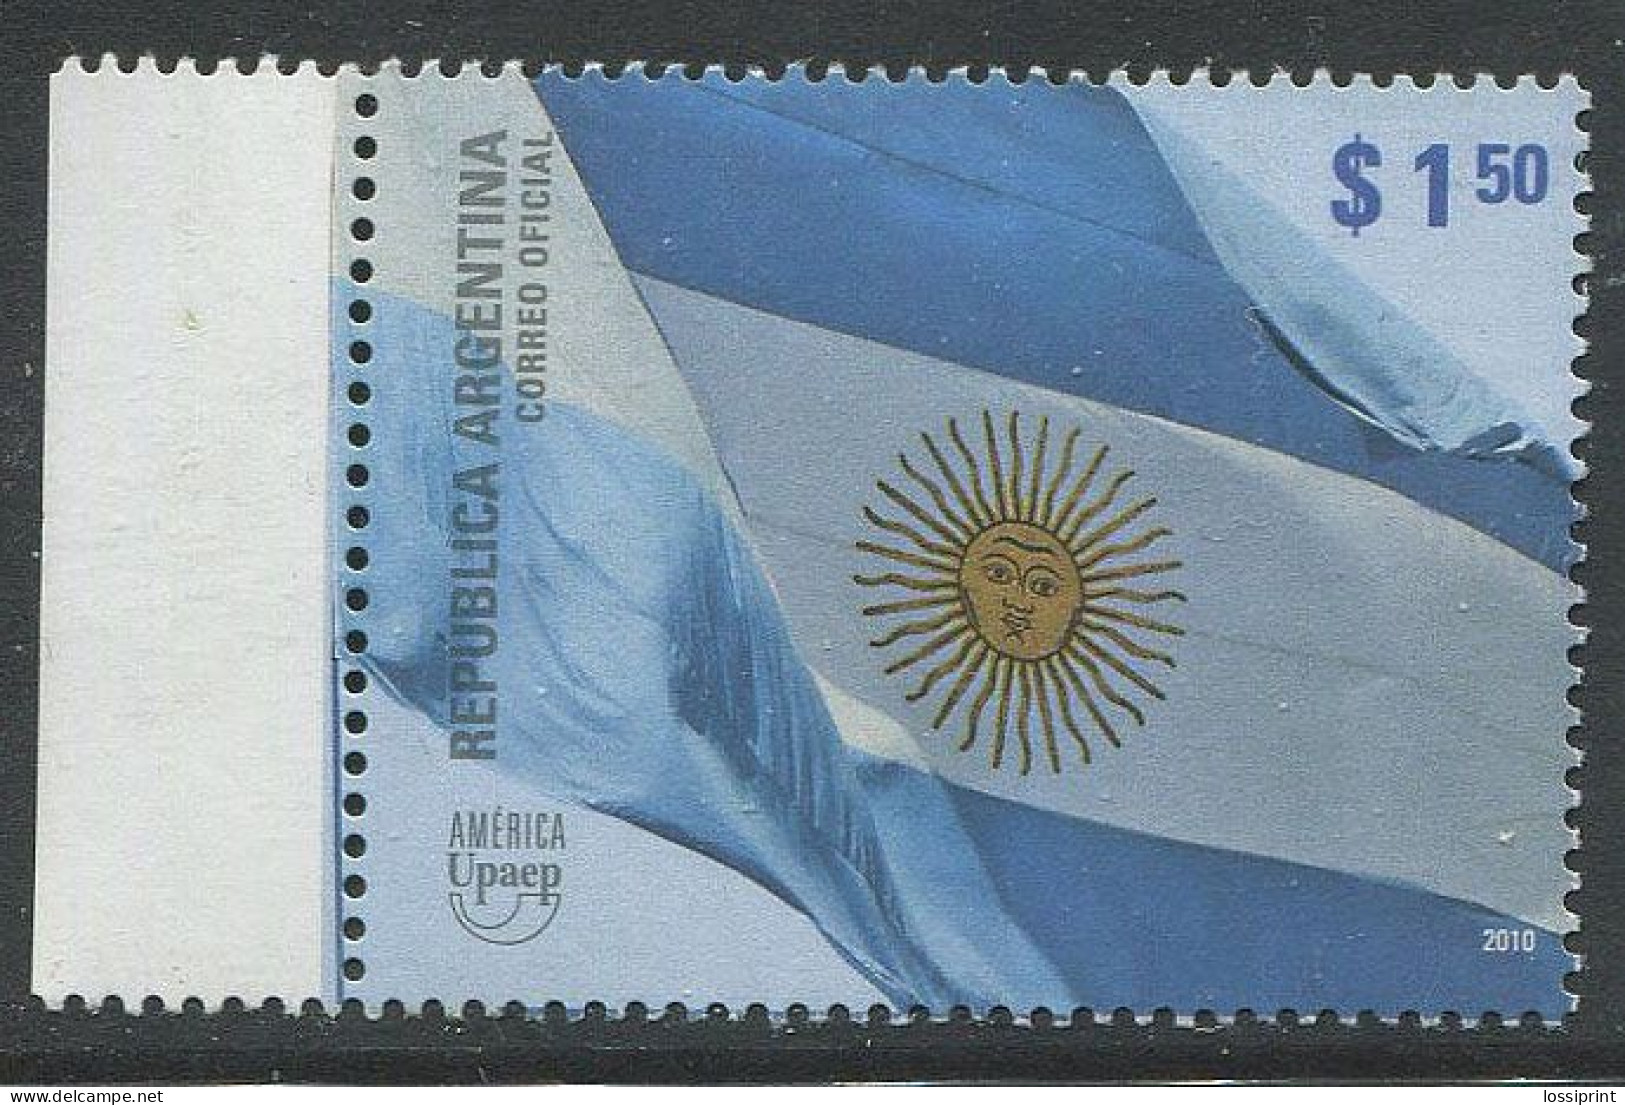 Argentina:Unused Stamp America UPAEP, 2010, MNH - Ungebraucht